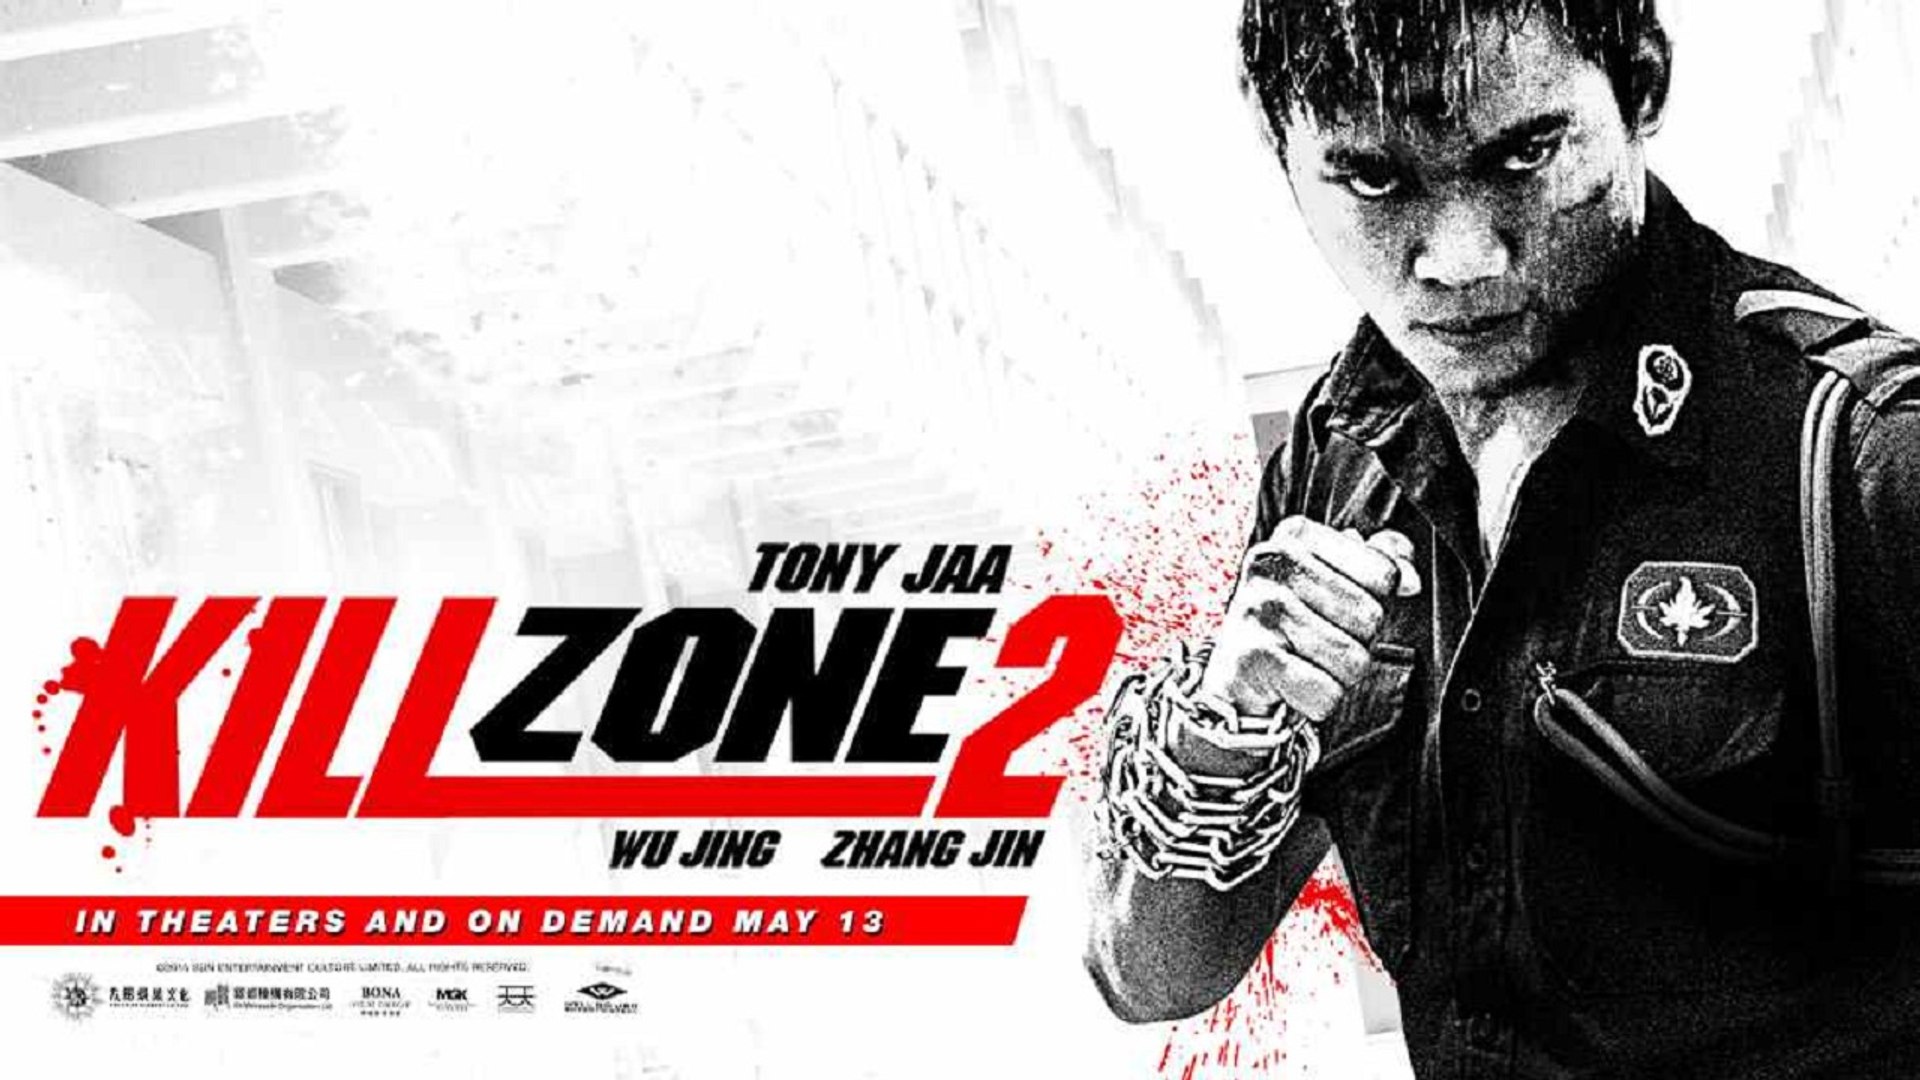 Action Movies 2016 - Jillzone 2 Full Movie - New Action Movies English Hollywood - Tony Jaa Action M